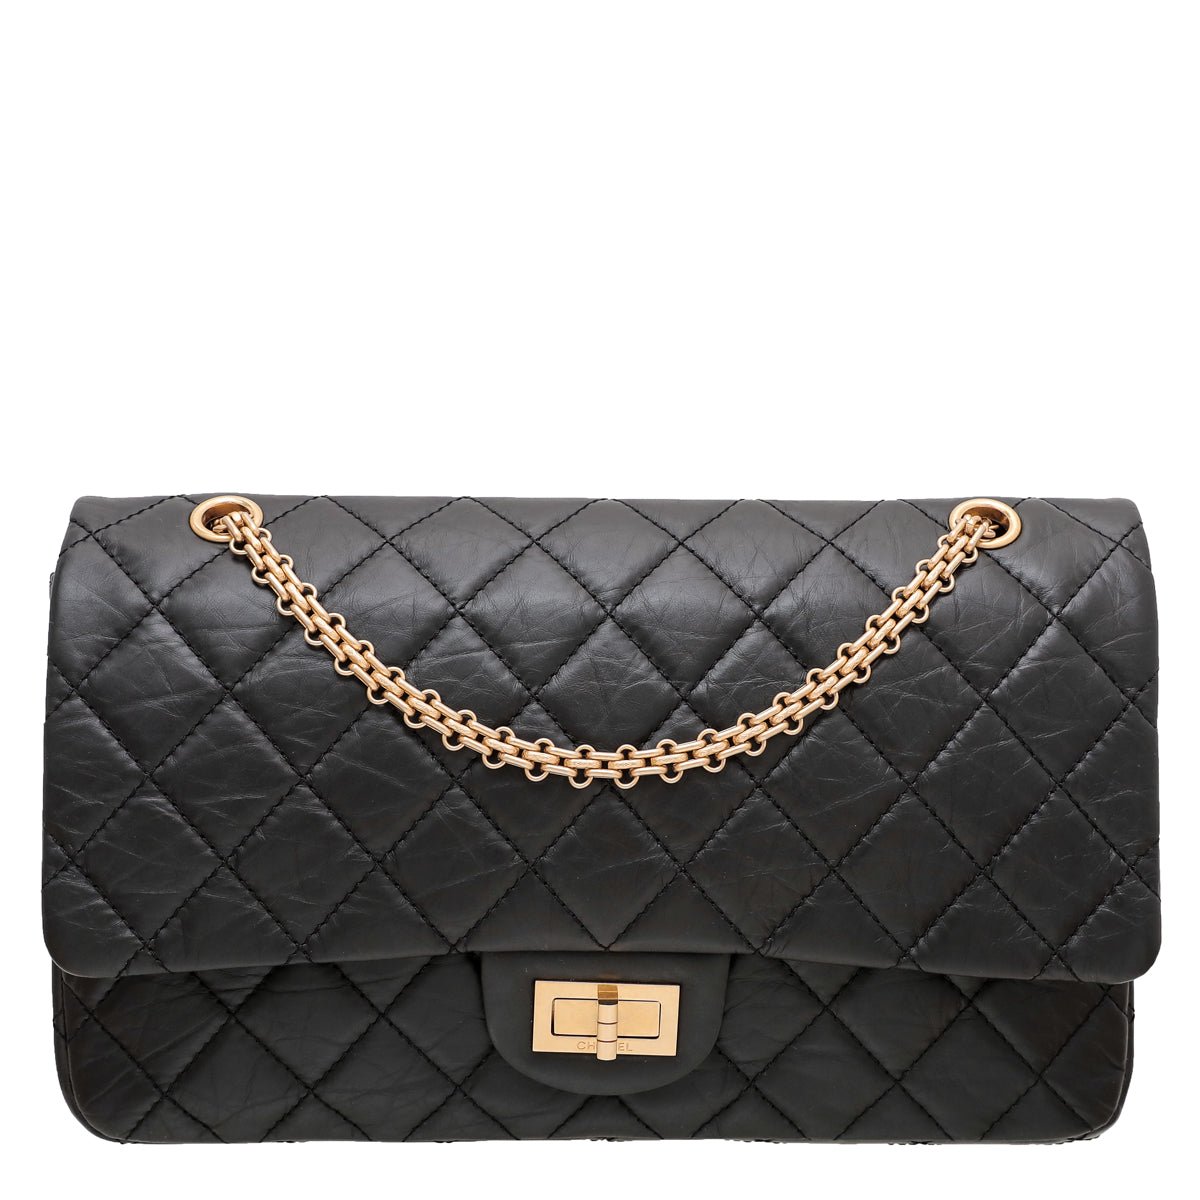 The Closet - Chanel Black 2.55 Reissue 227 Flap Distressed Bag | The Closet